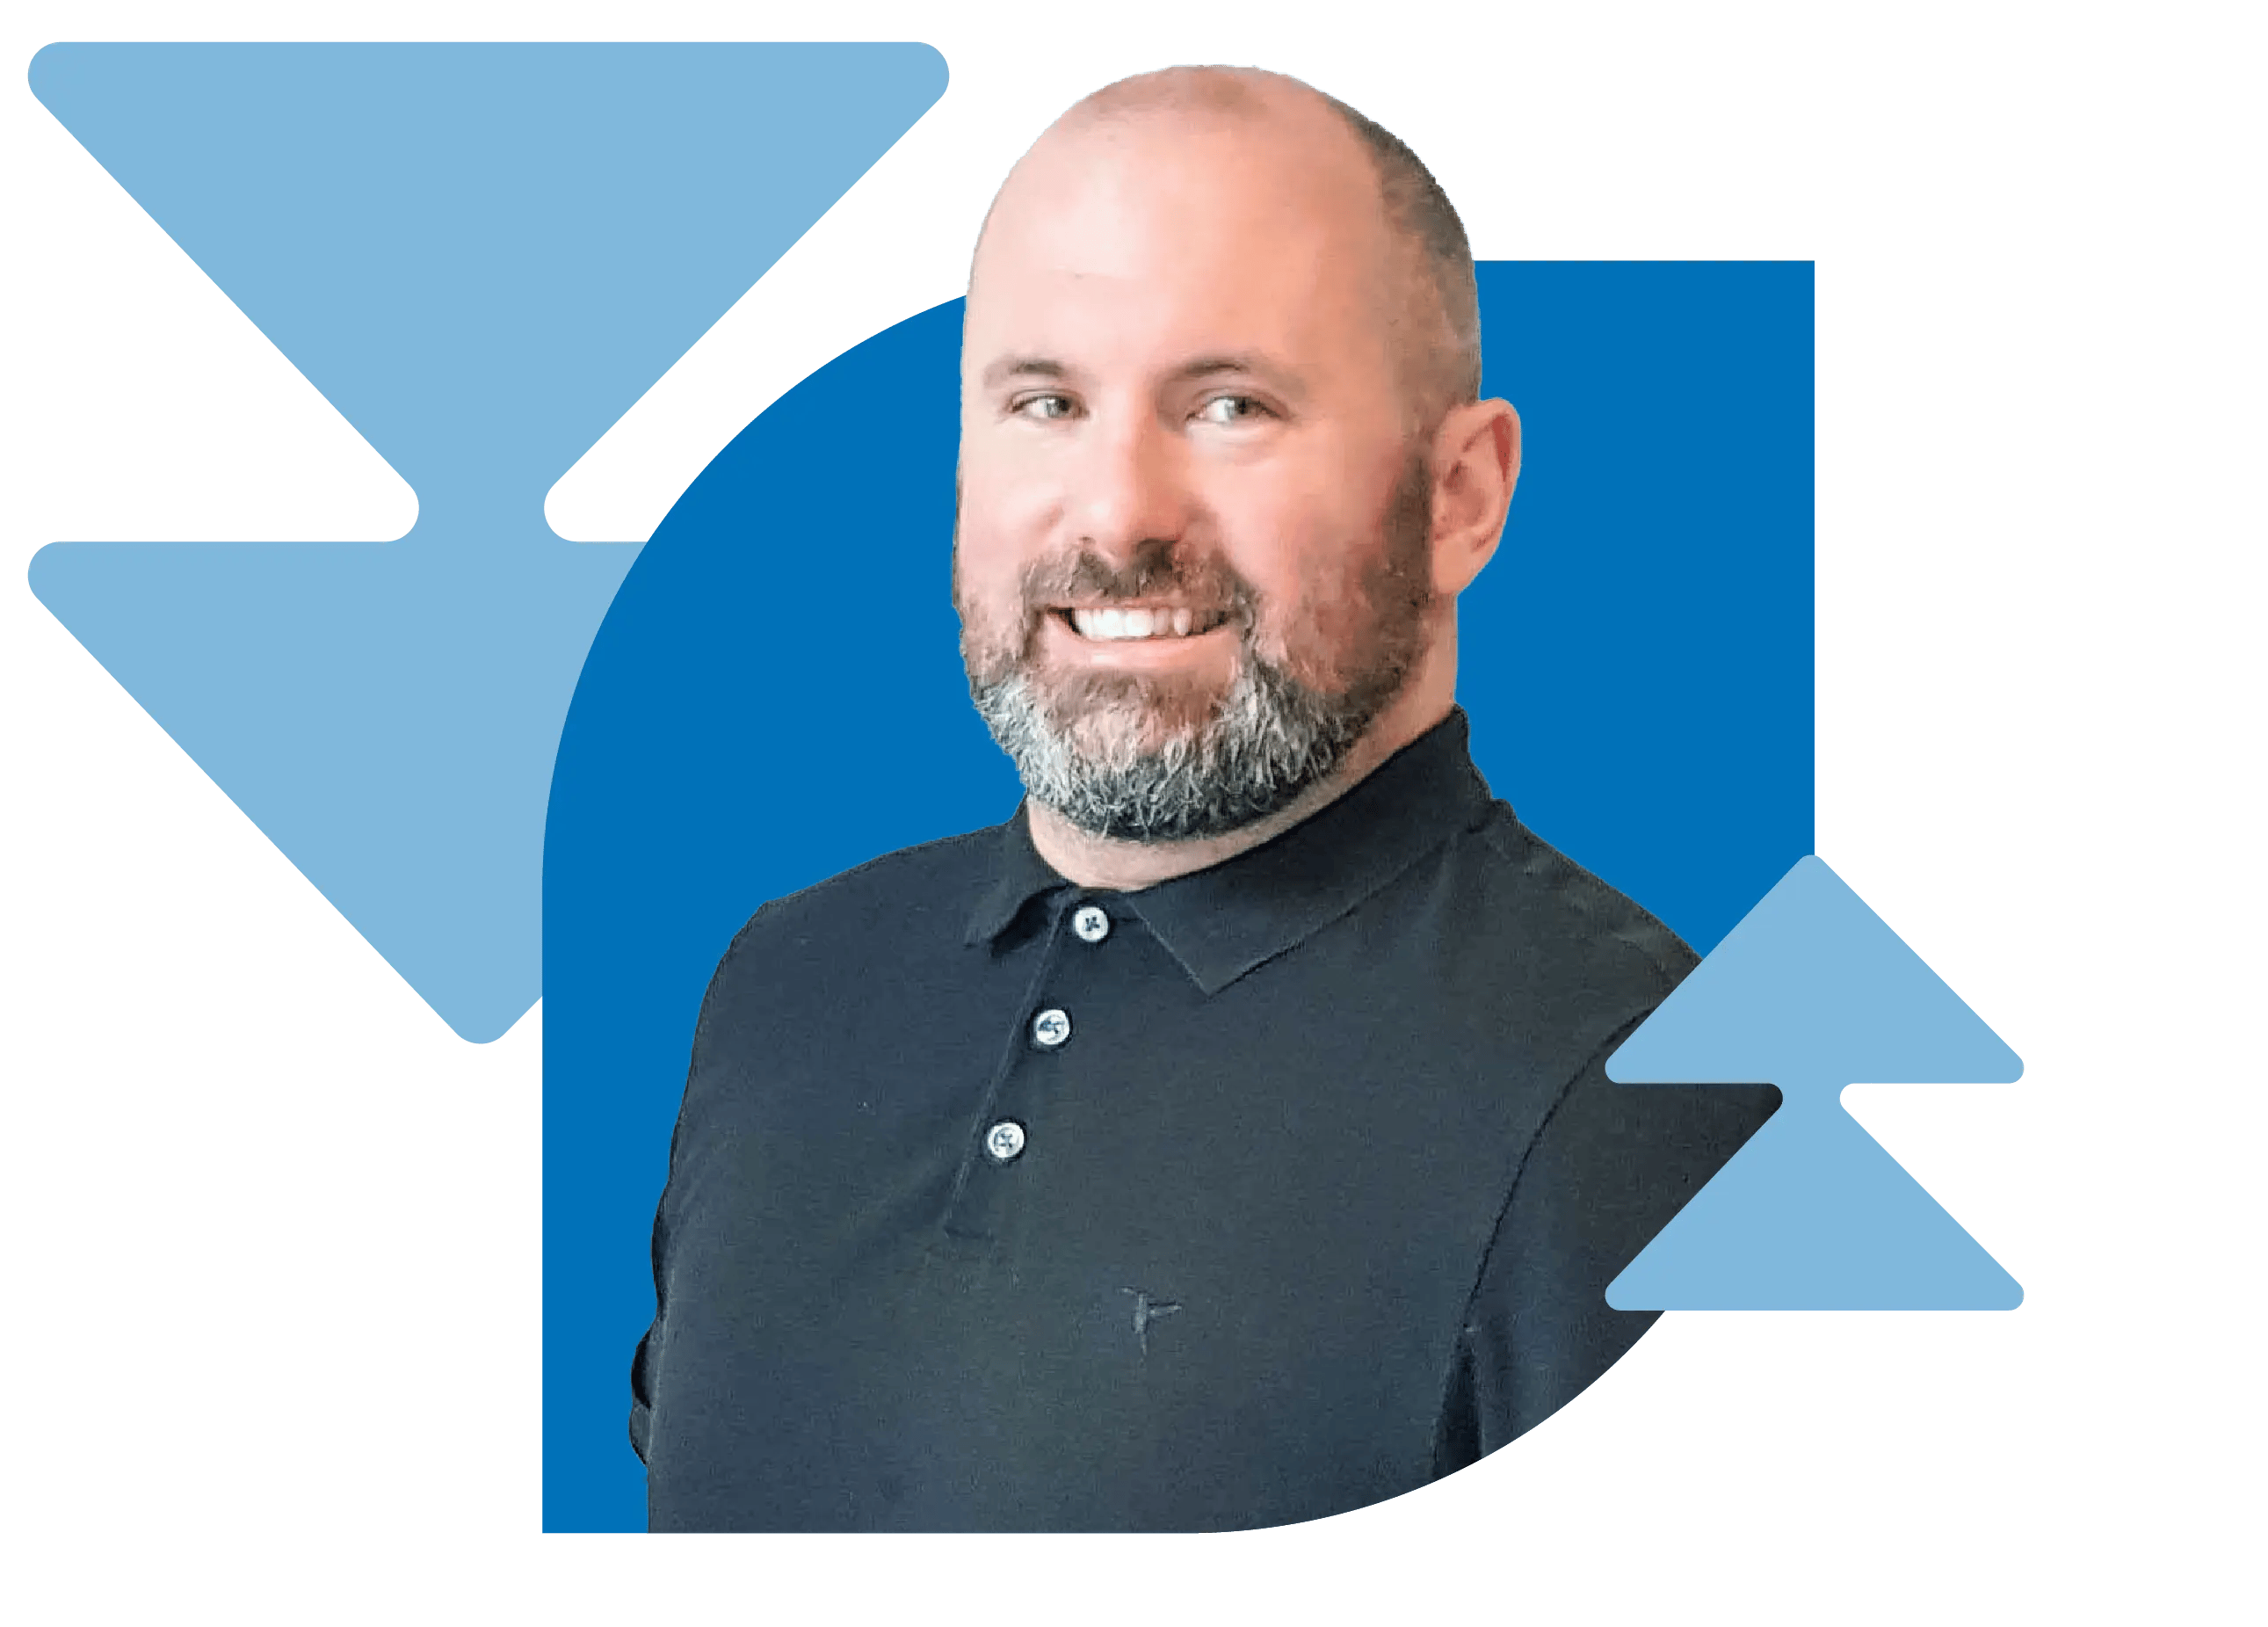 Neil McCormack, Sales Lead at Nursebuddy